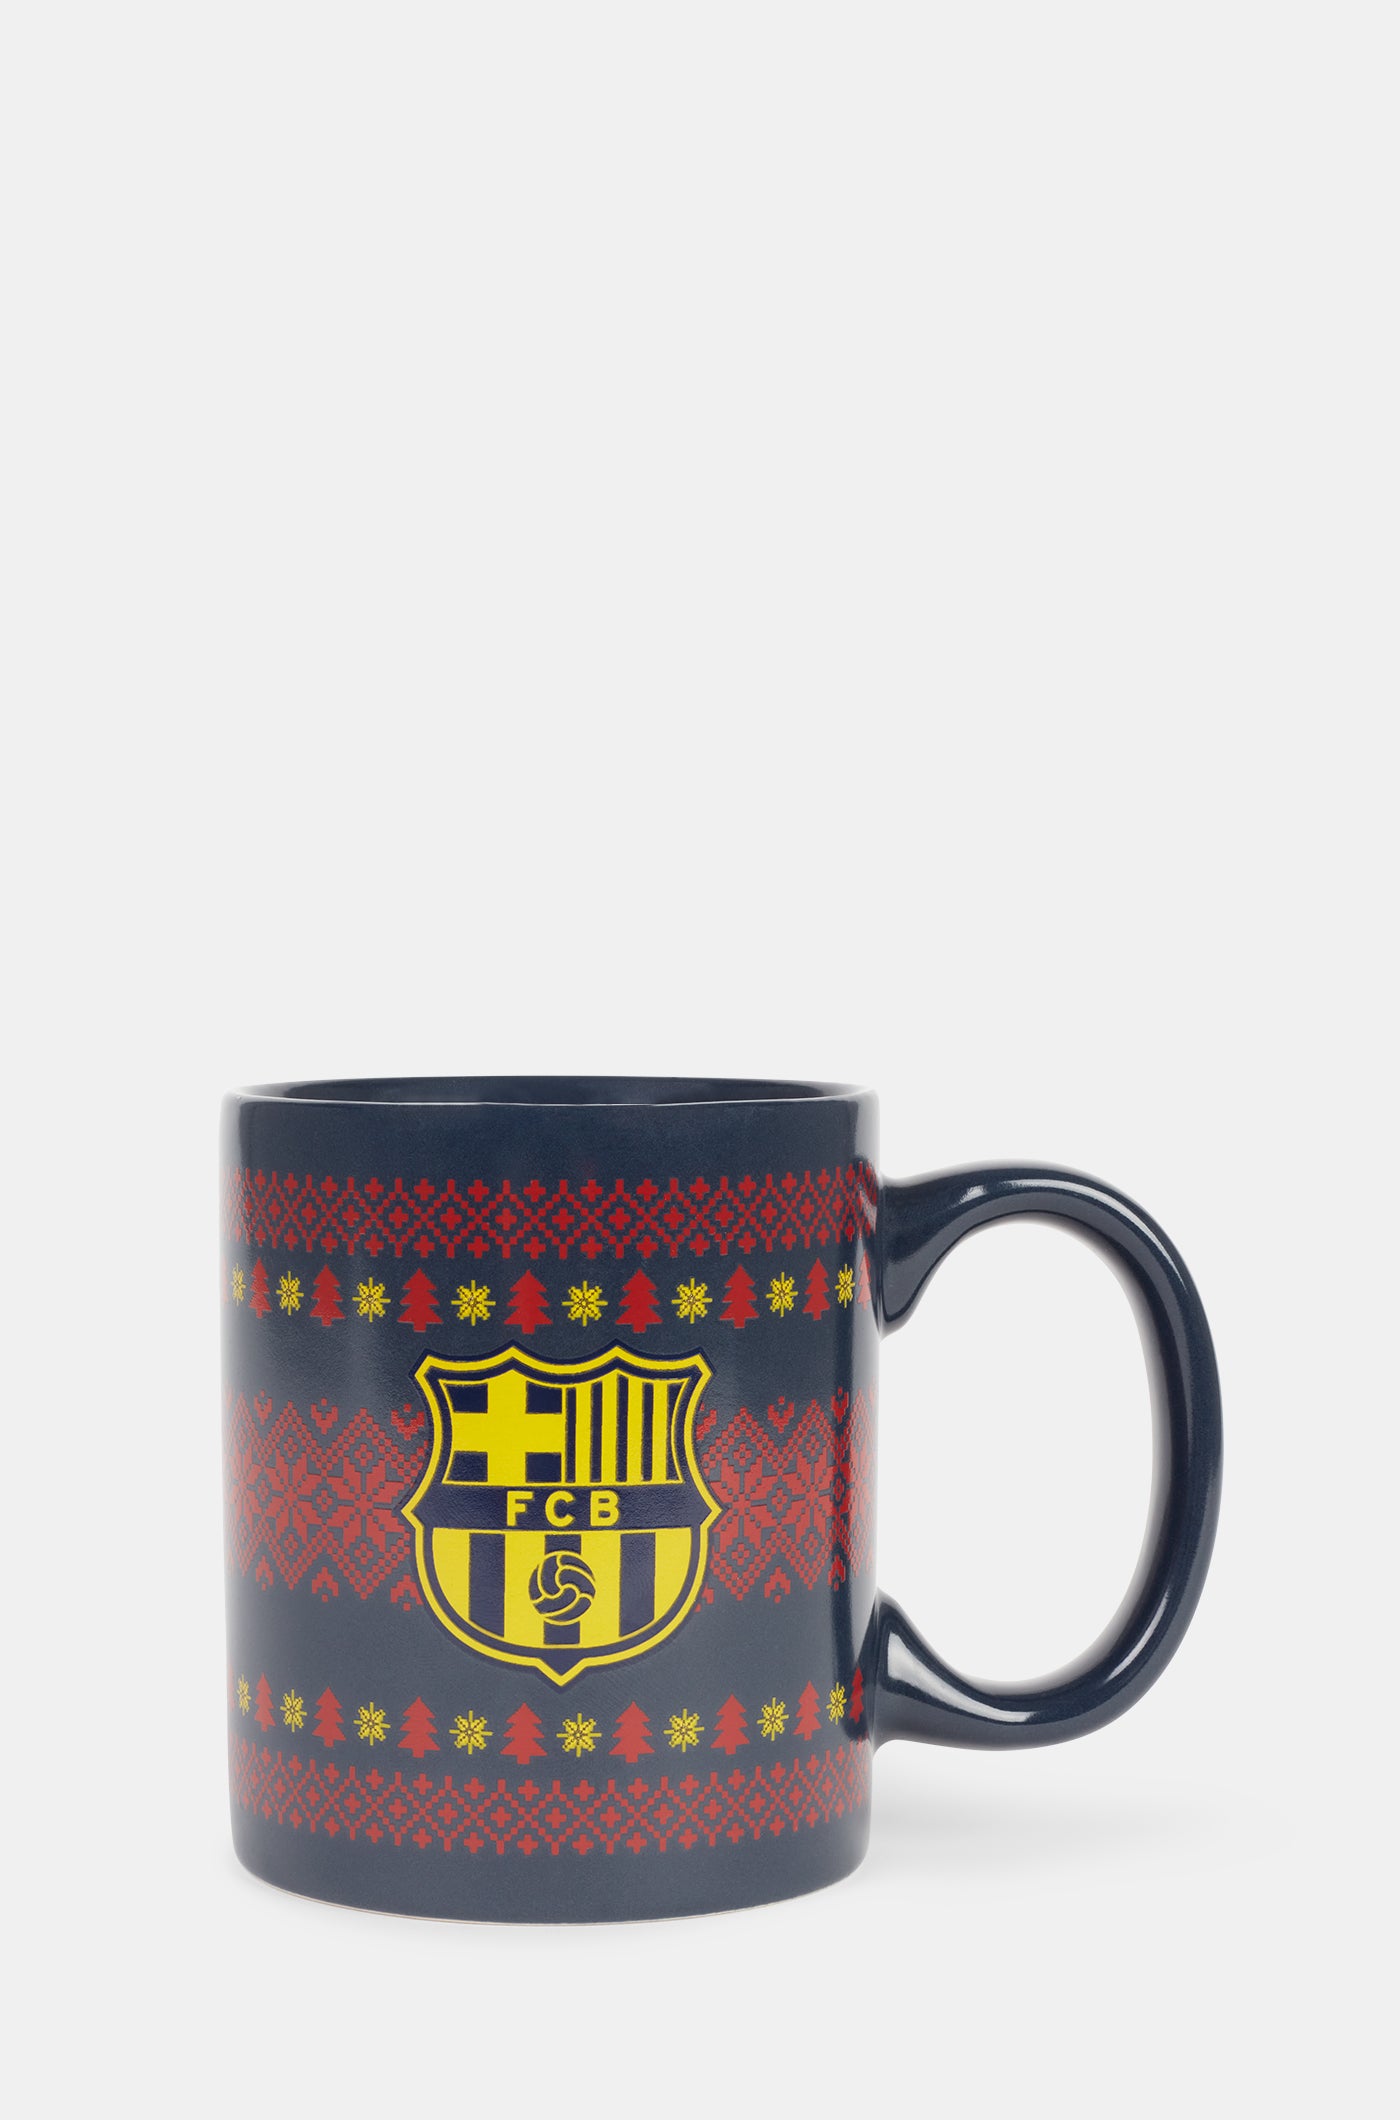  FC Barcelona Weihnachtsbecher